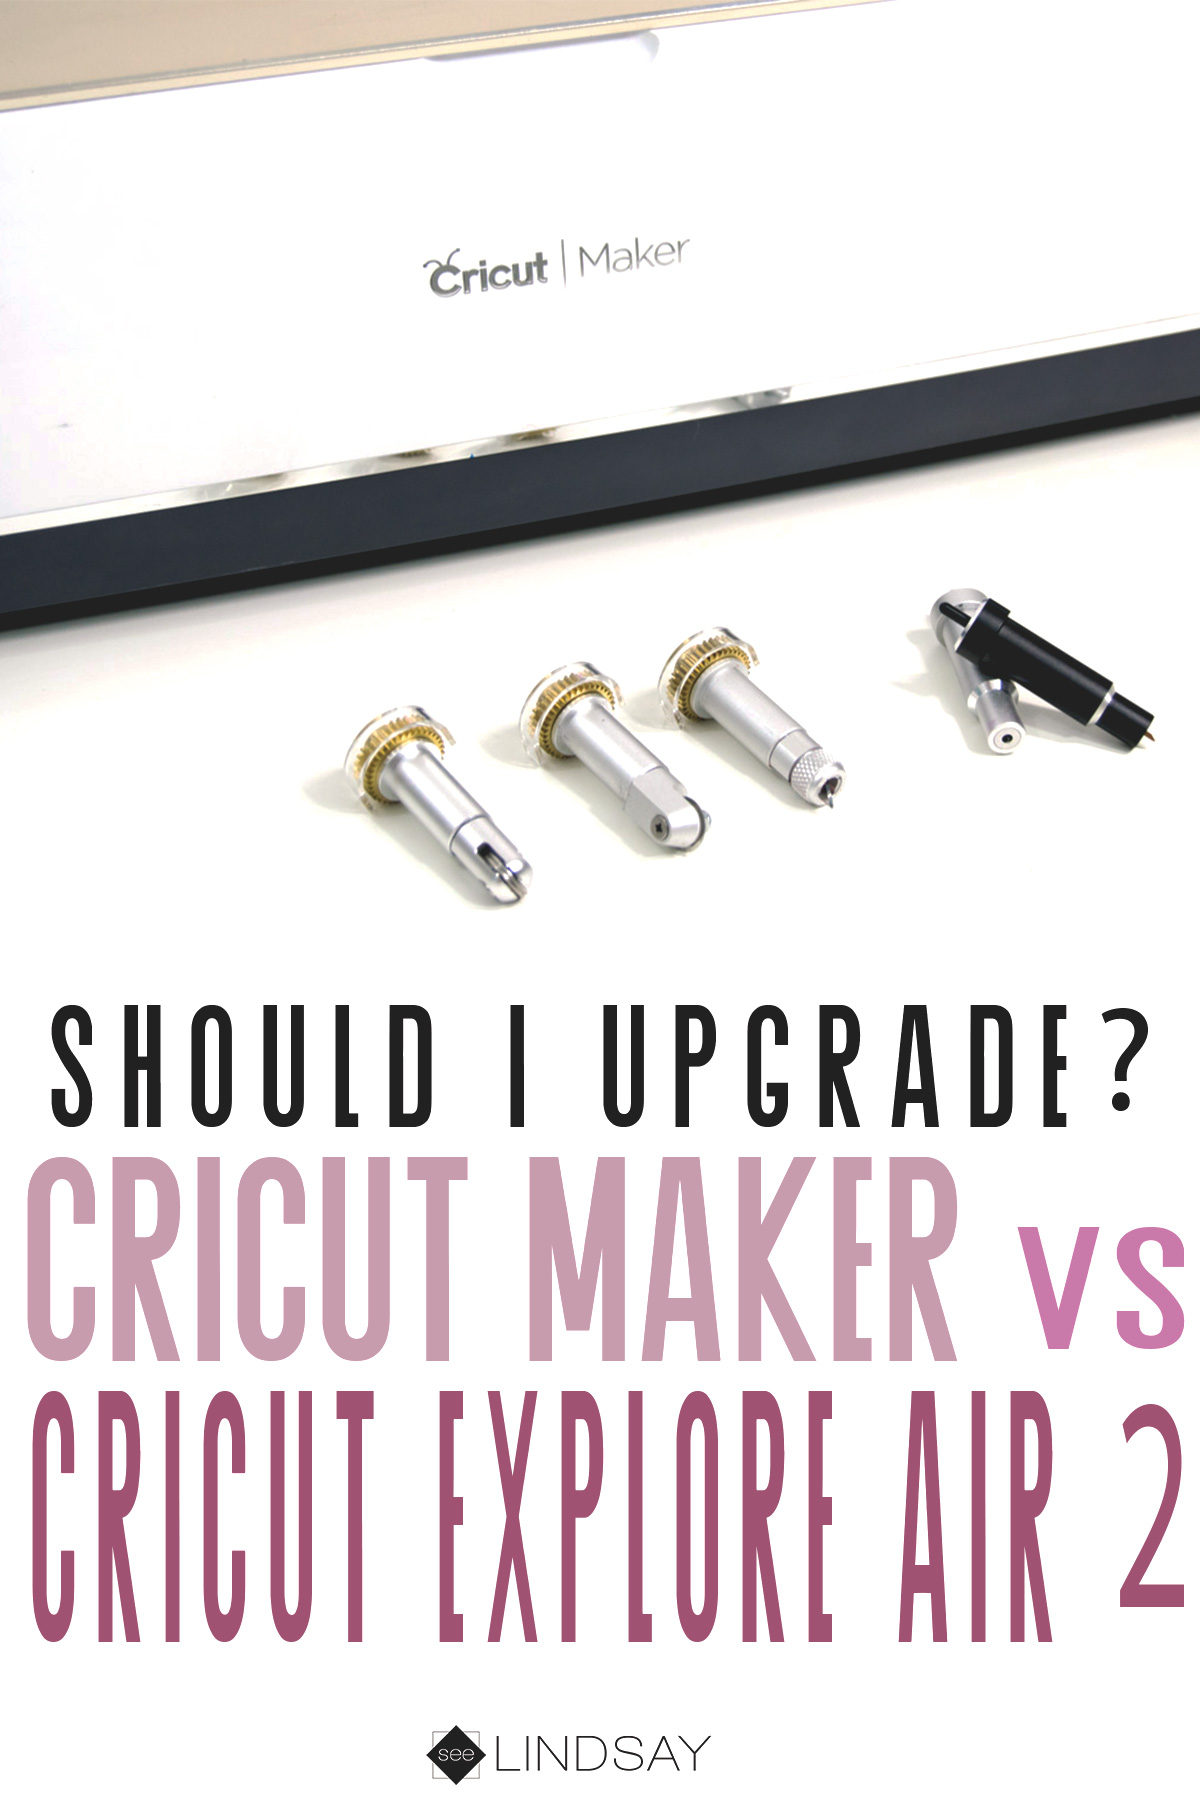 Cricut Maker vs Cricut Explore Air 2 - Which Machine Should I Buy?